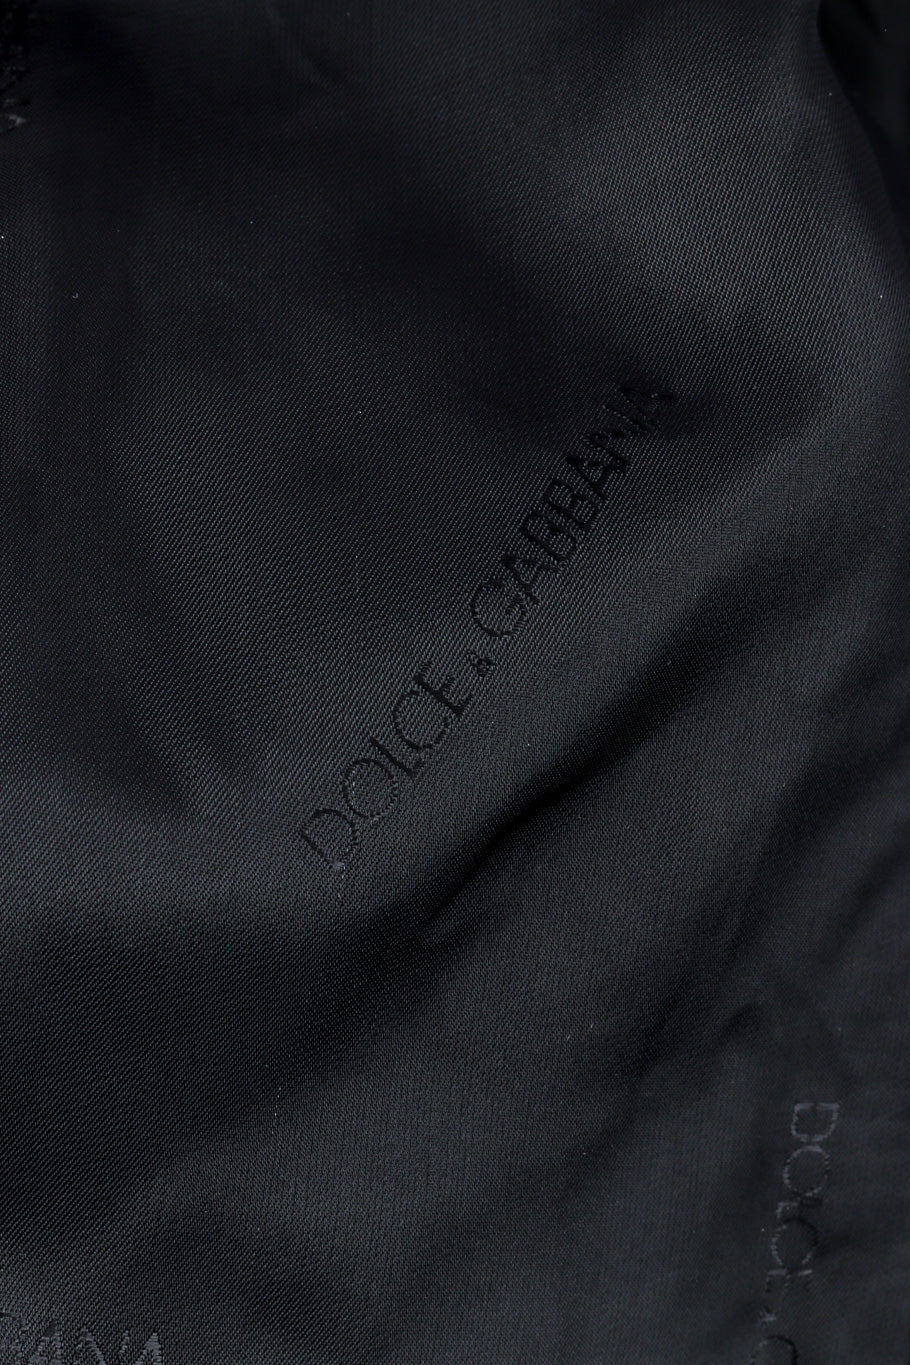 Dolce and Gabbana Floral Velvet Jacket and Pant Set jacket signature print lining @recessla